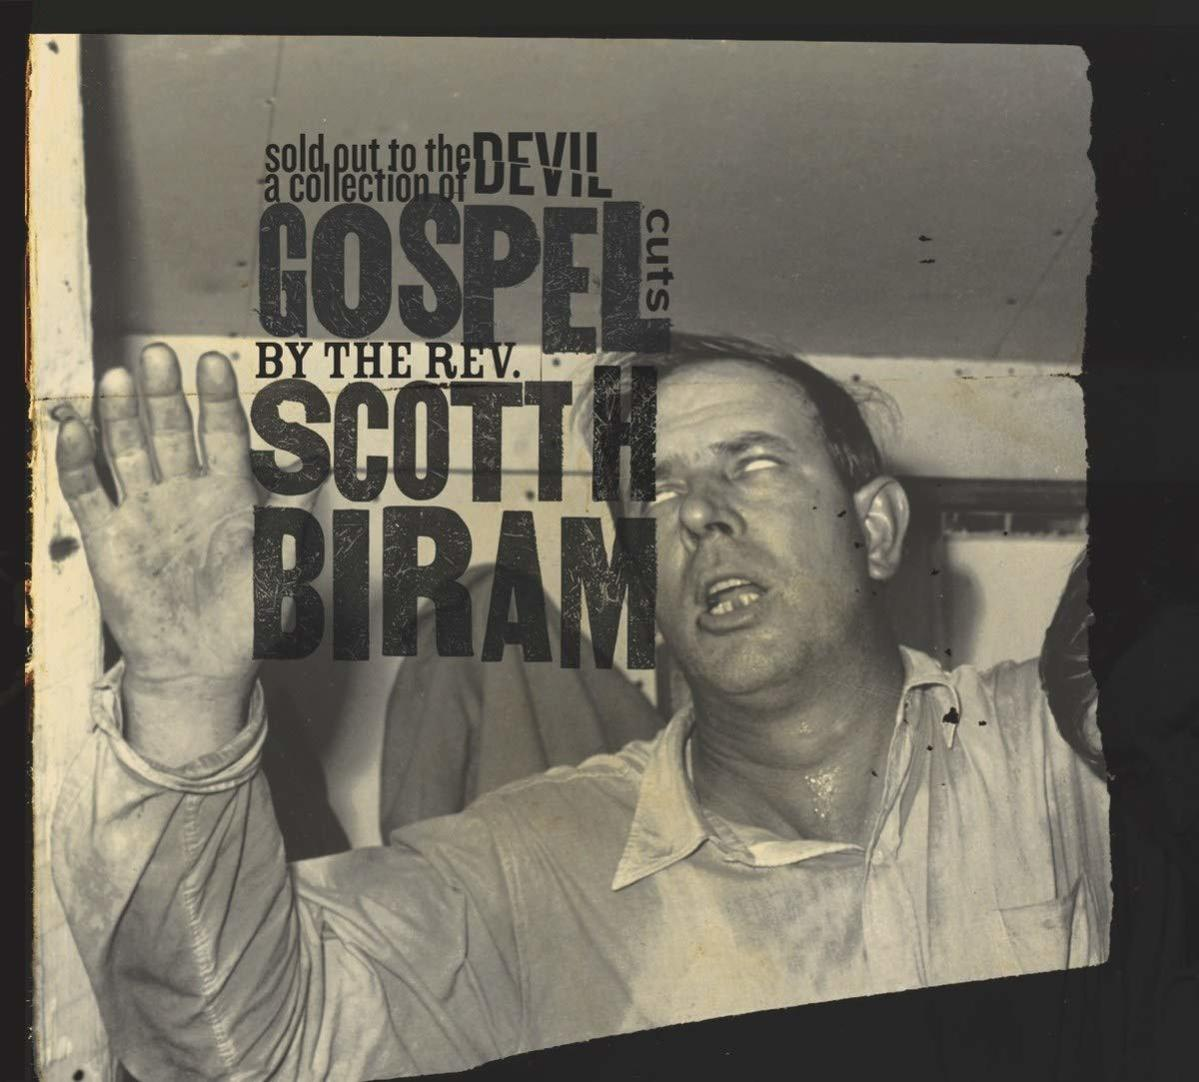 TO H. Biram (Vinyl) - - OUT DEVIL SOLD Scott THE